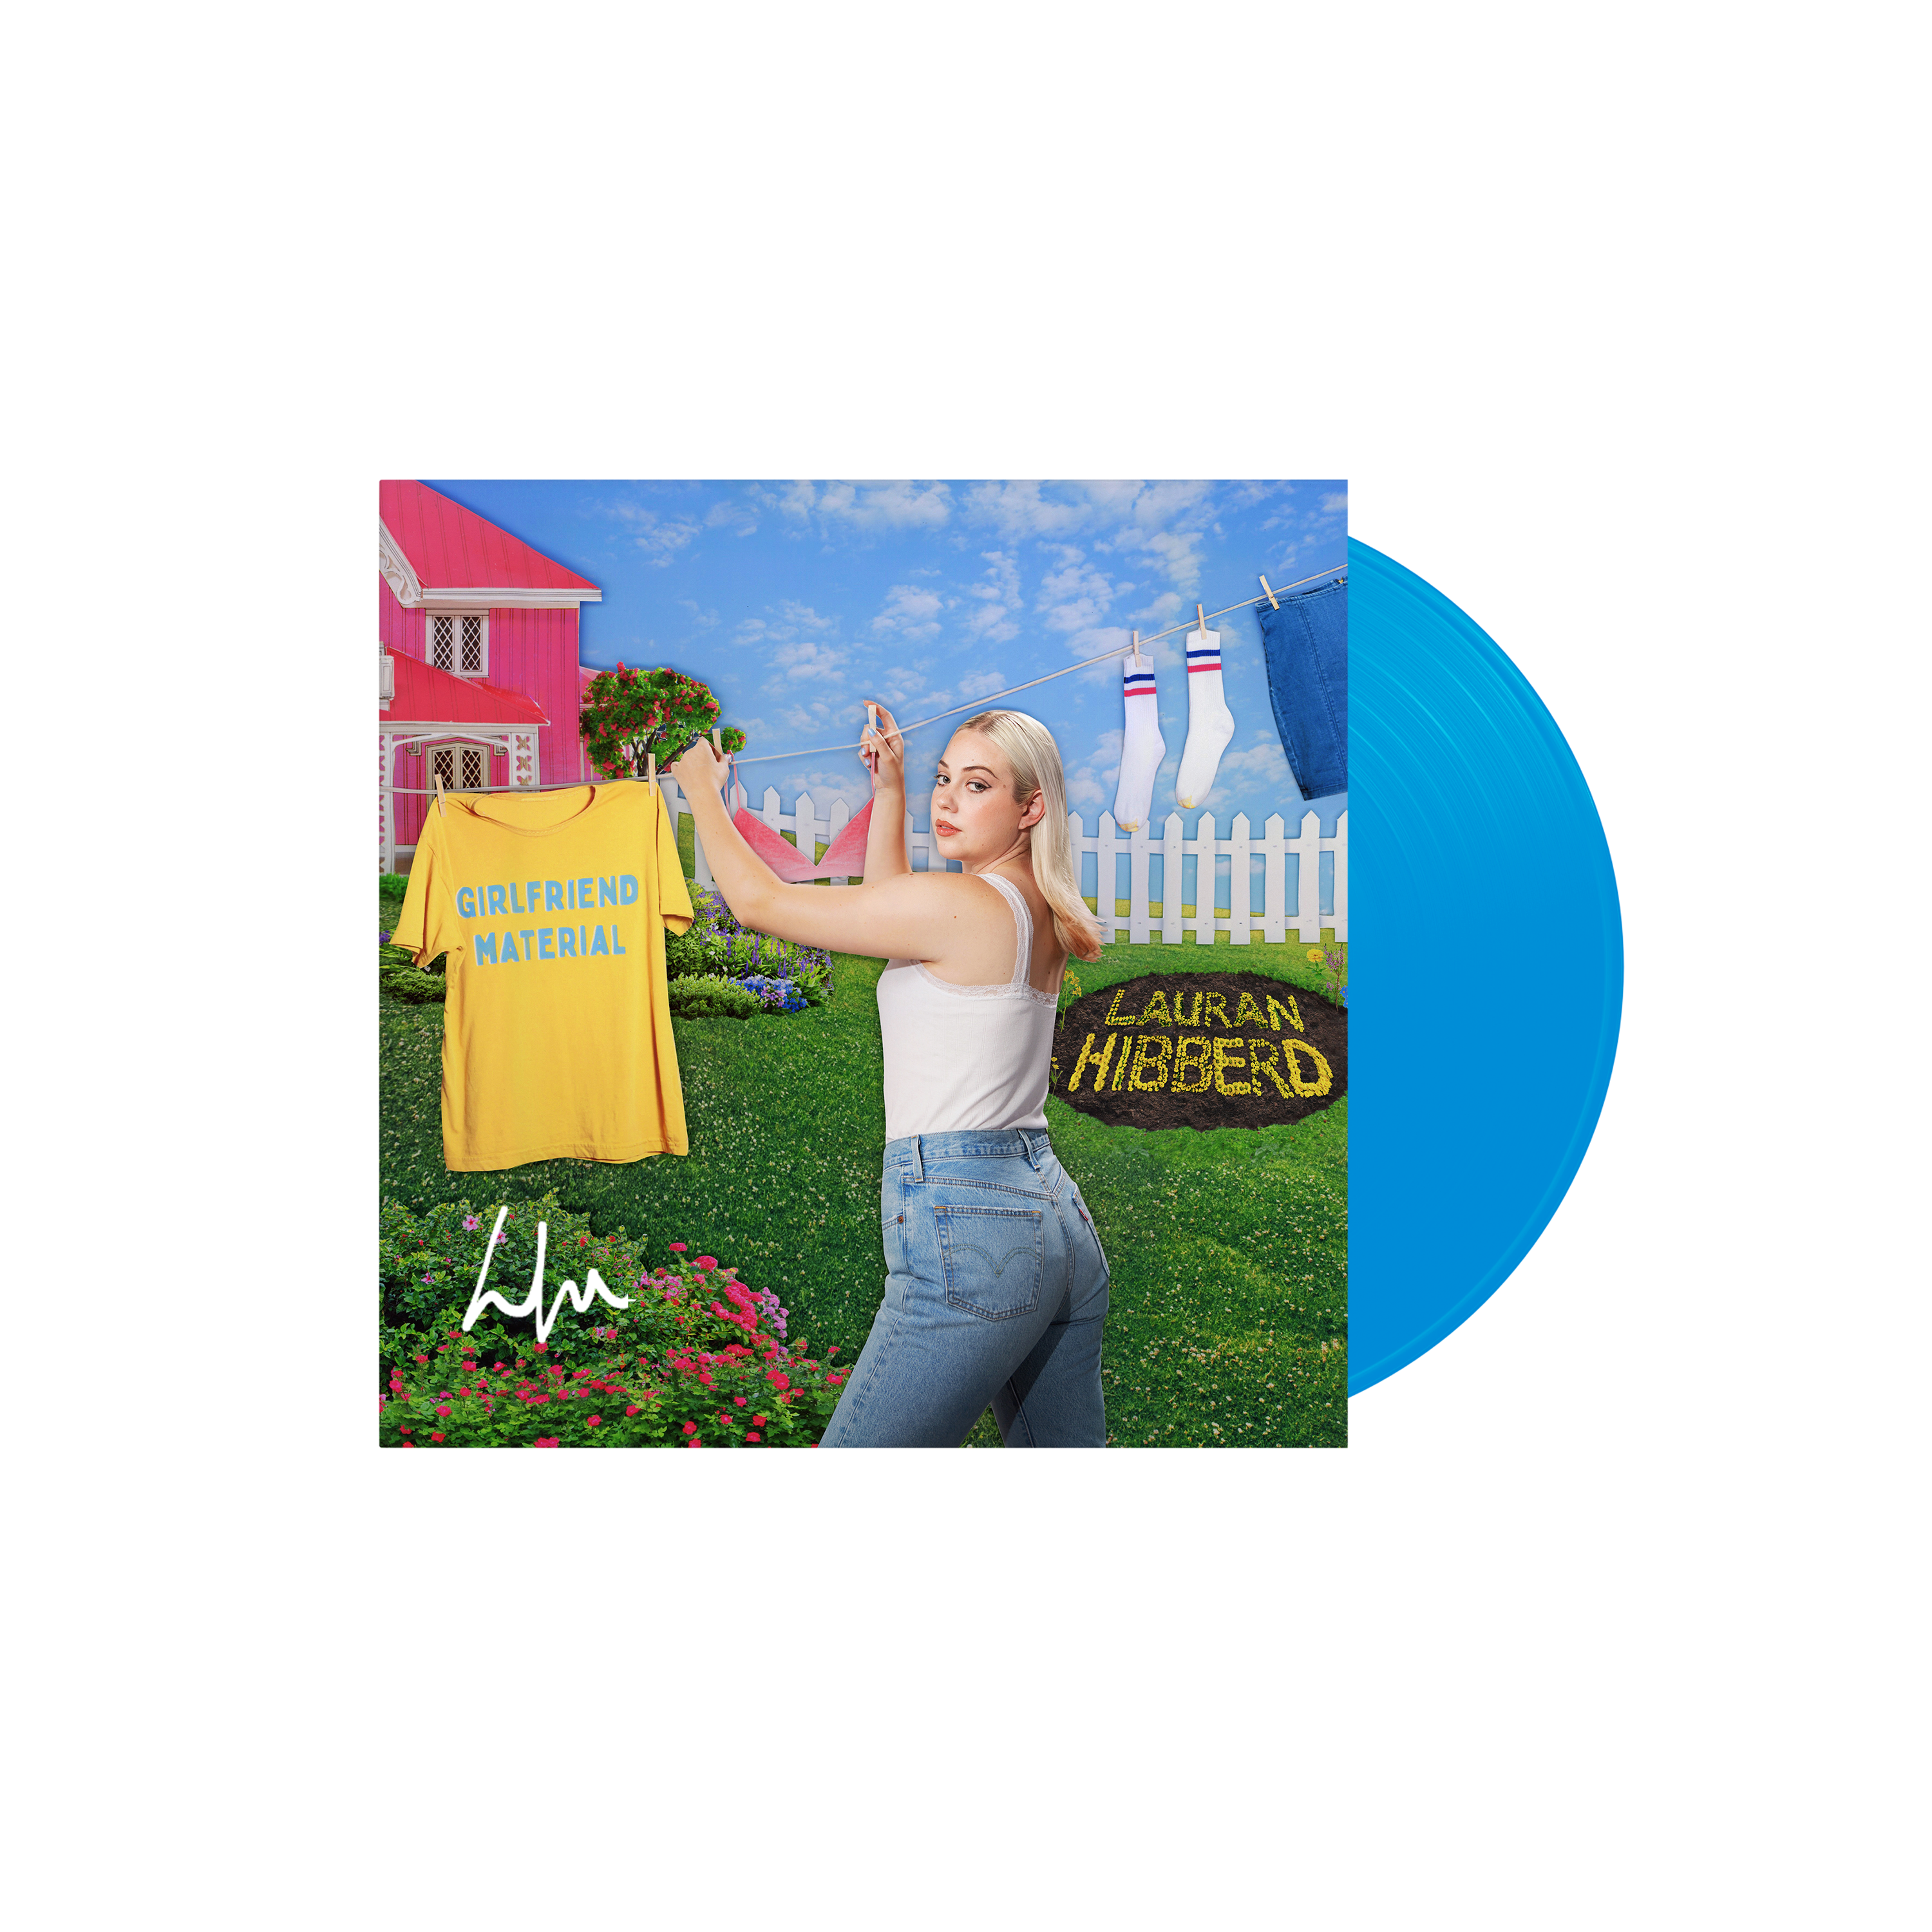 Lauran Hibberd - girlfriend material: Signed Sky Blue Vinyl LP